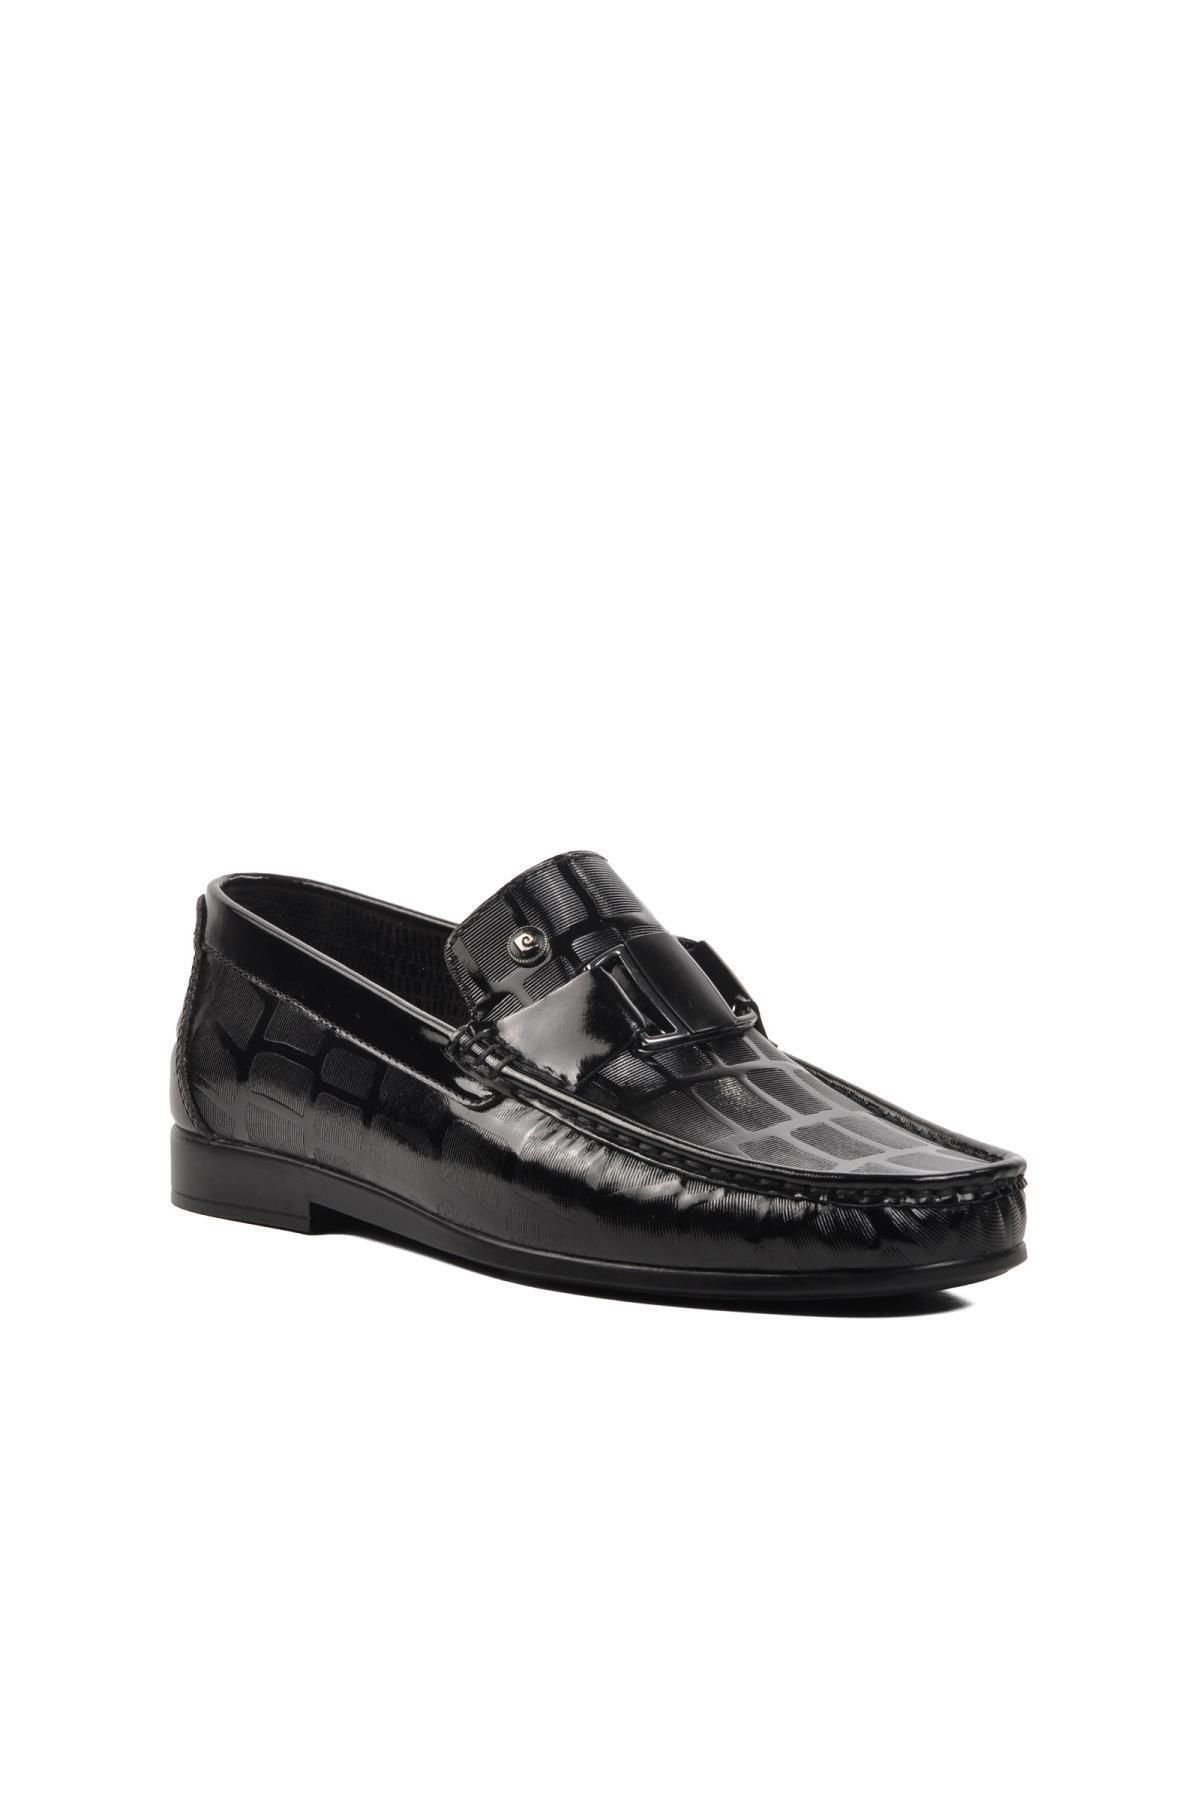 Pierre Cardin 25104 Siyah Rugan Hakiki Deri Erkek Loafer Ayakkabı